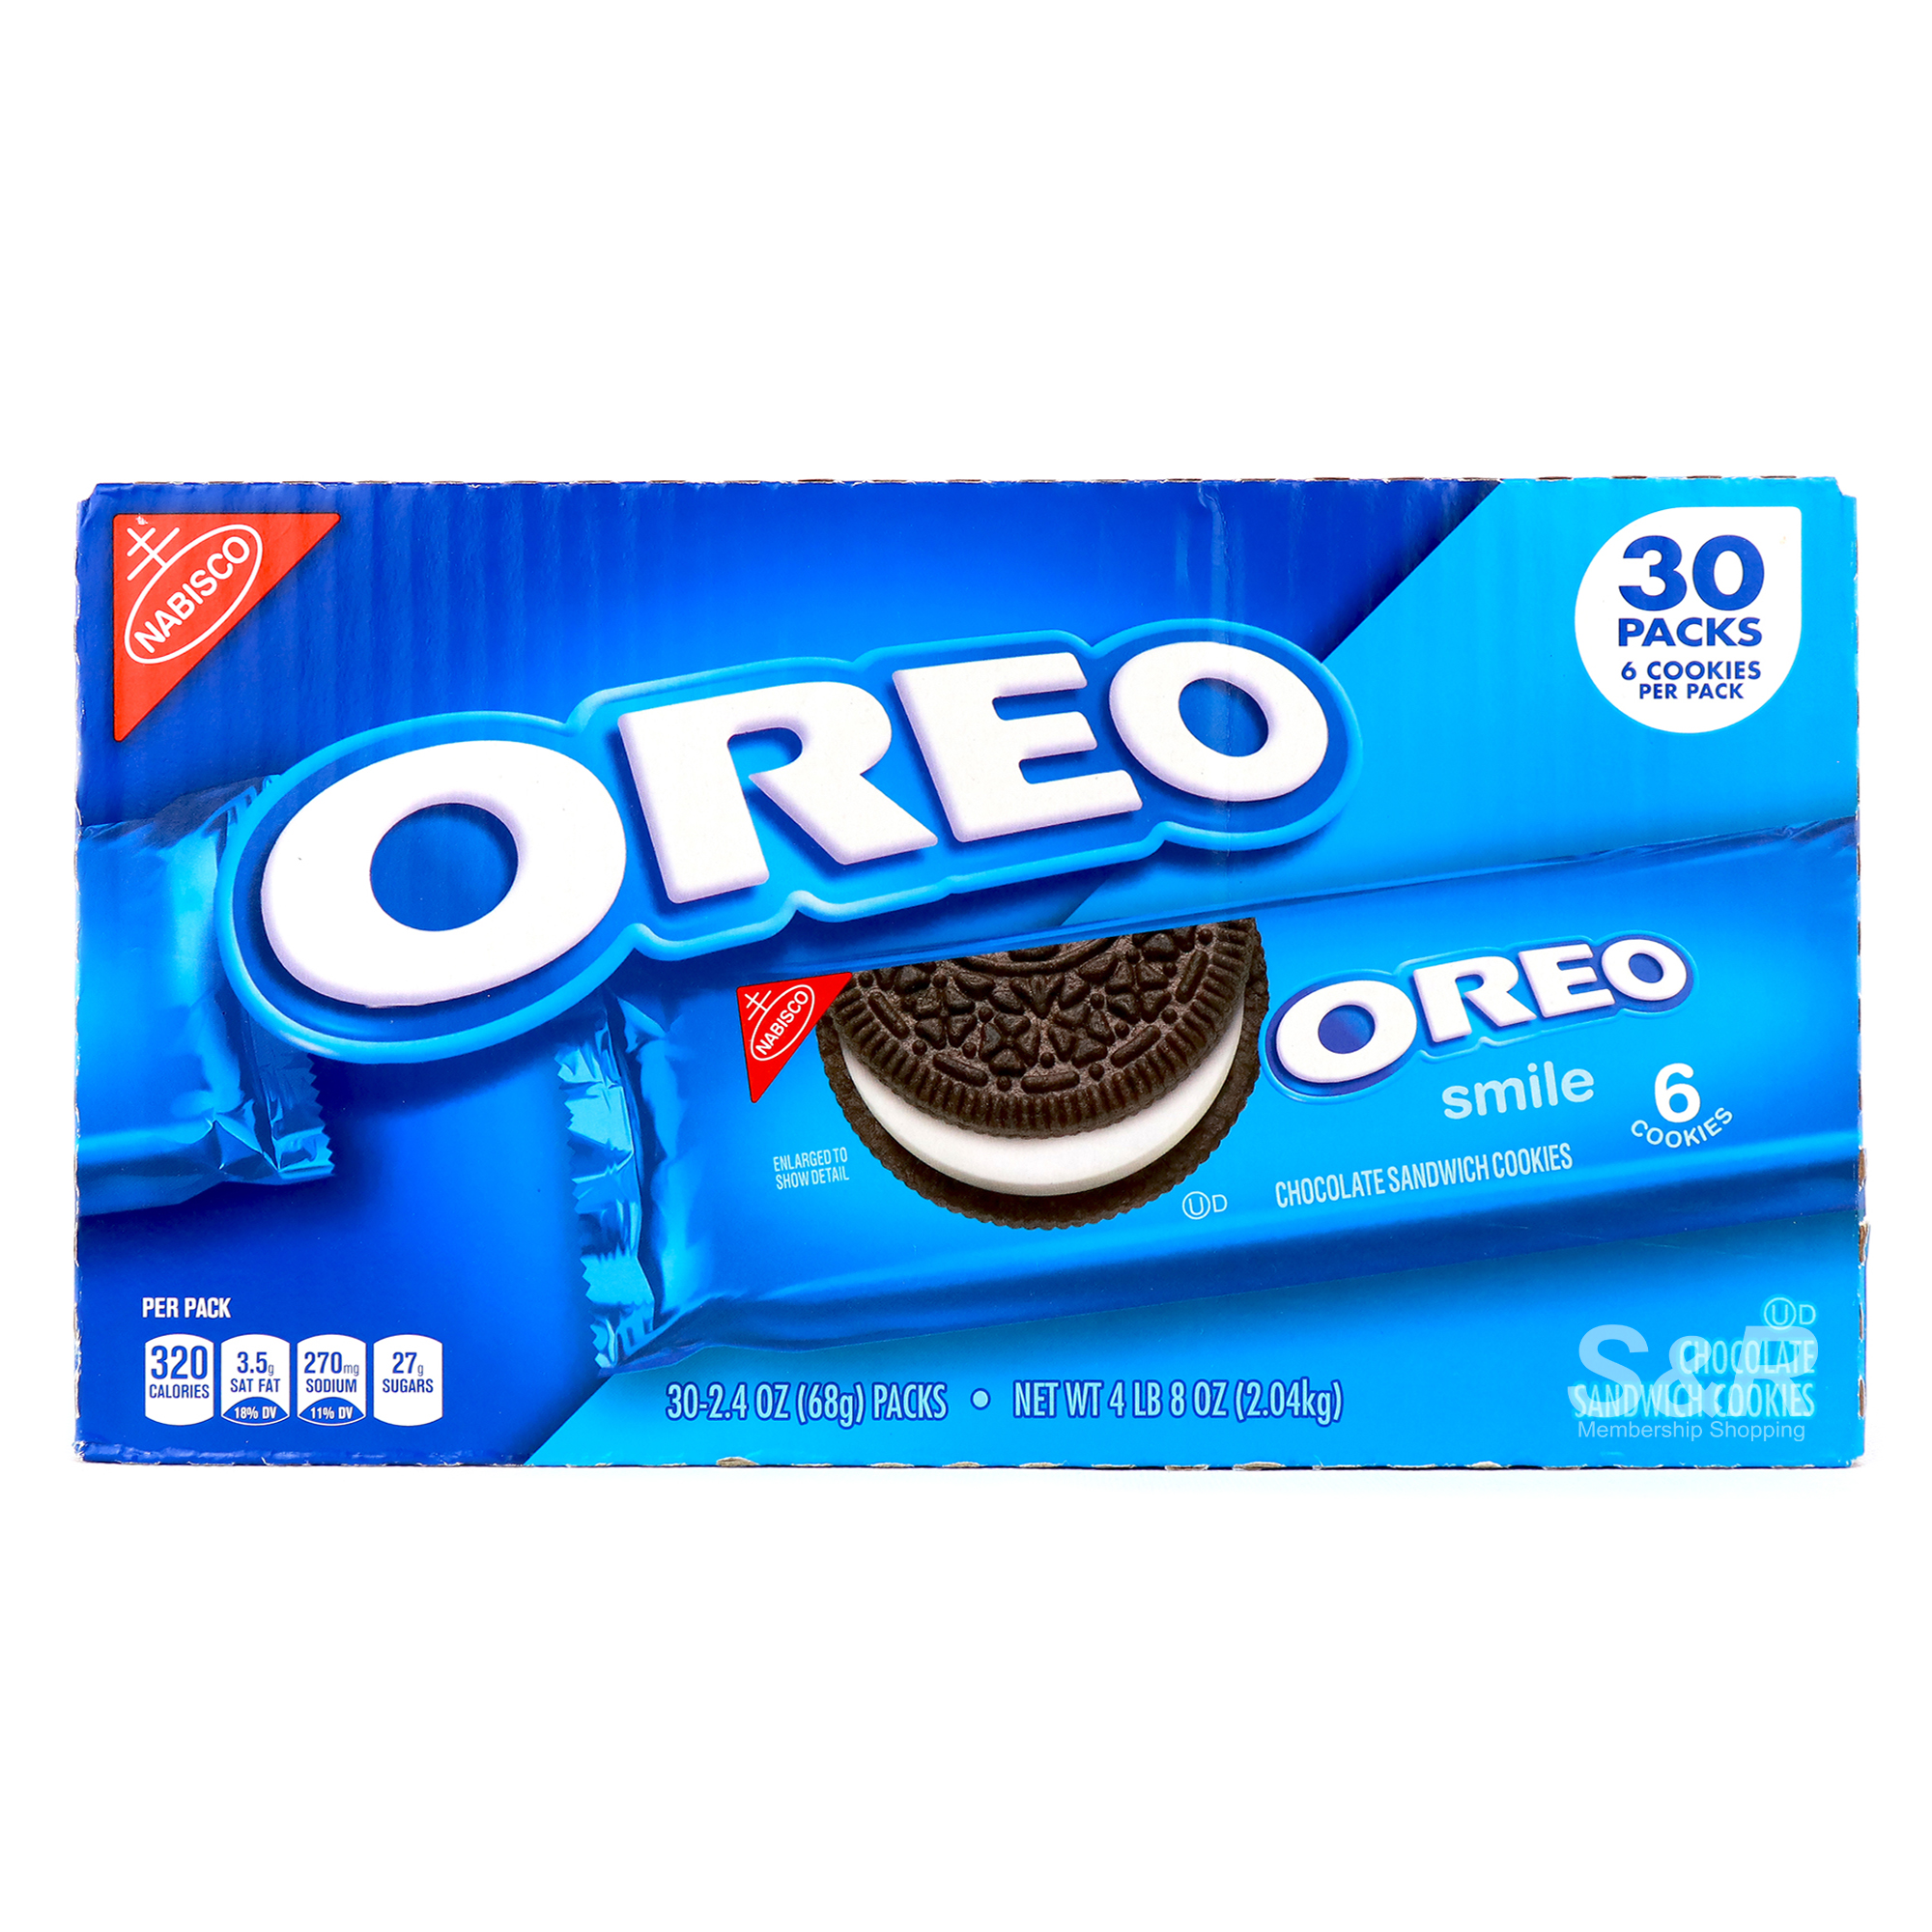 Oreo Smiles Chocolate Sandwich Cookies 30 packs